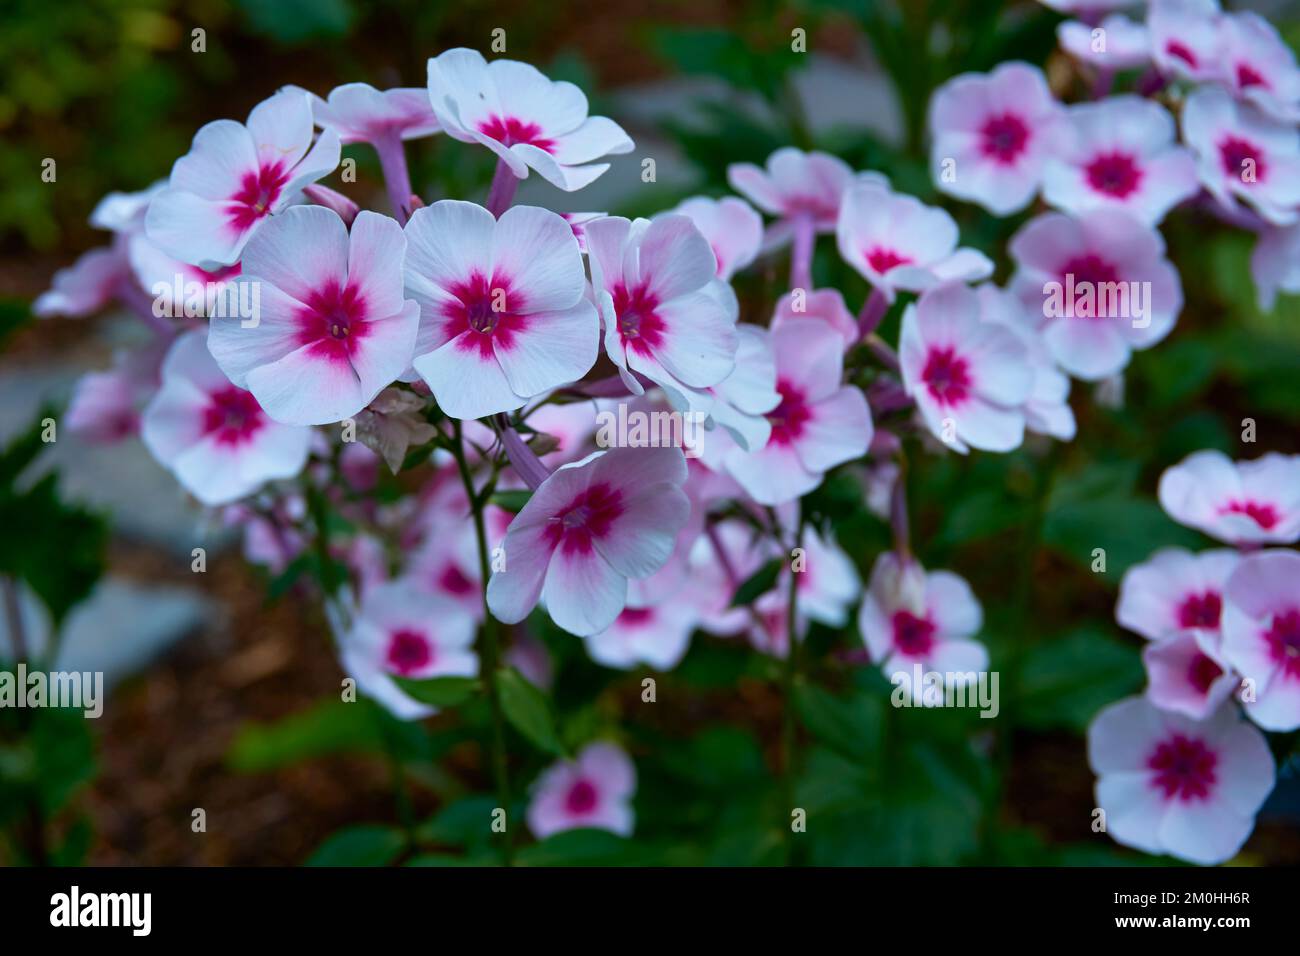 Flowers of herbaceous garden plant Phlox paniculata Swizzle. Stock Photo